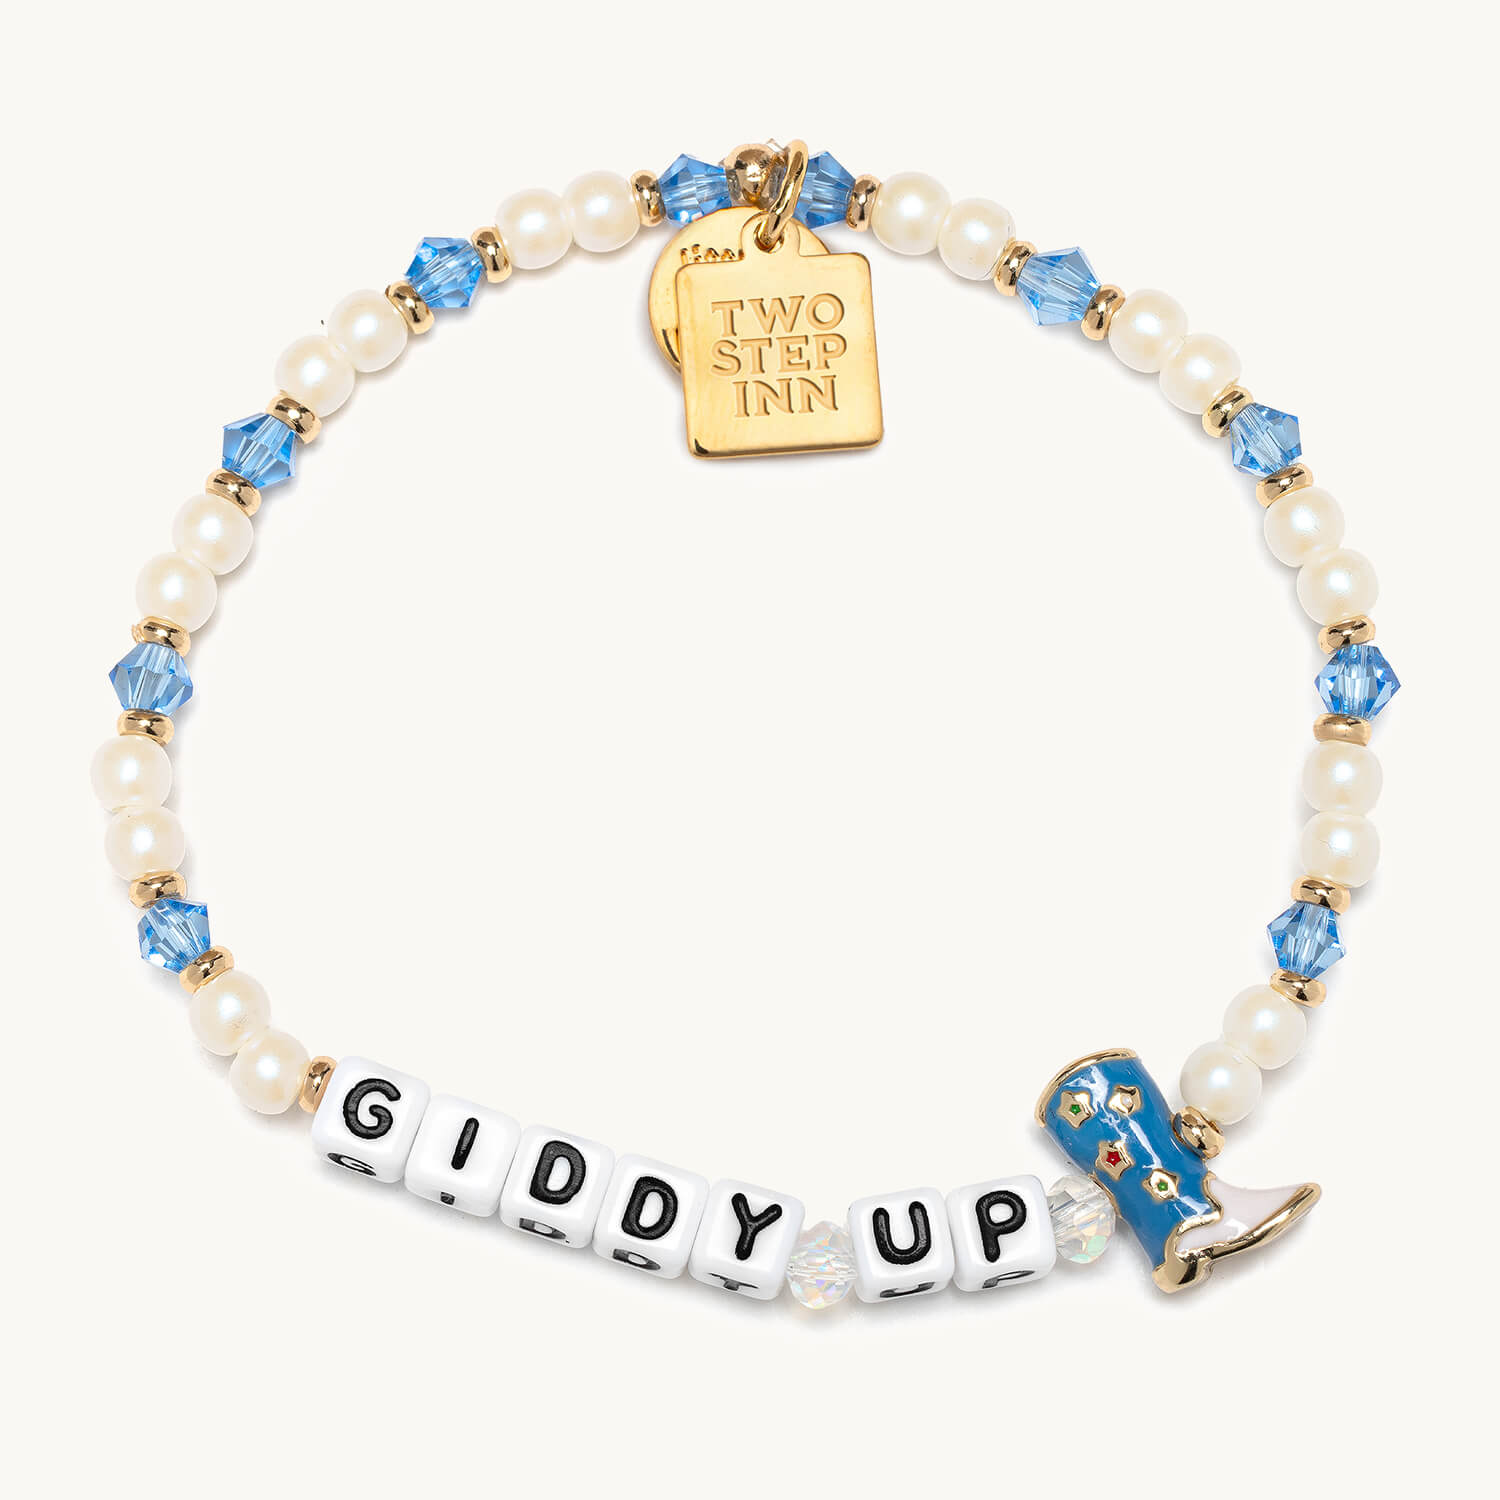 Giddy Up- Little Words Project Bracelet 